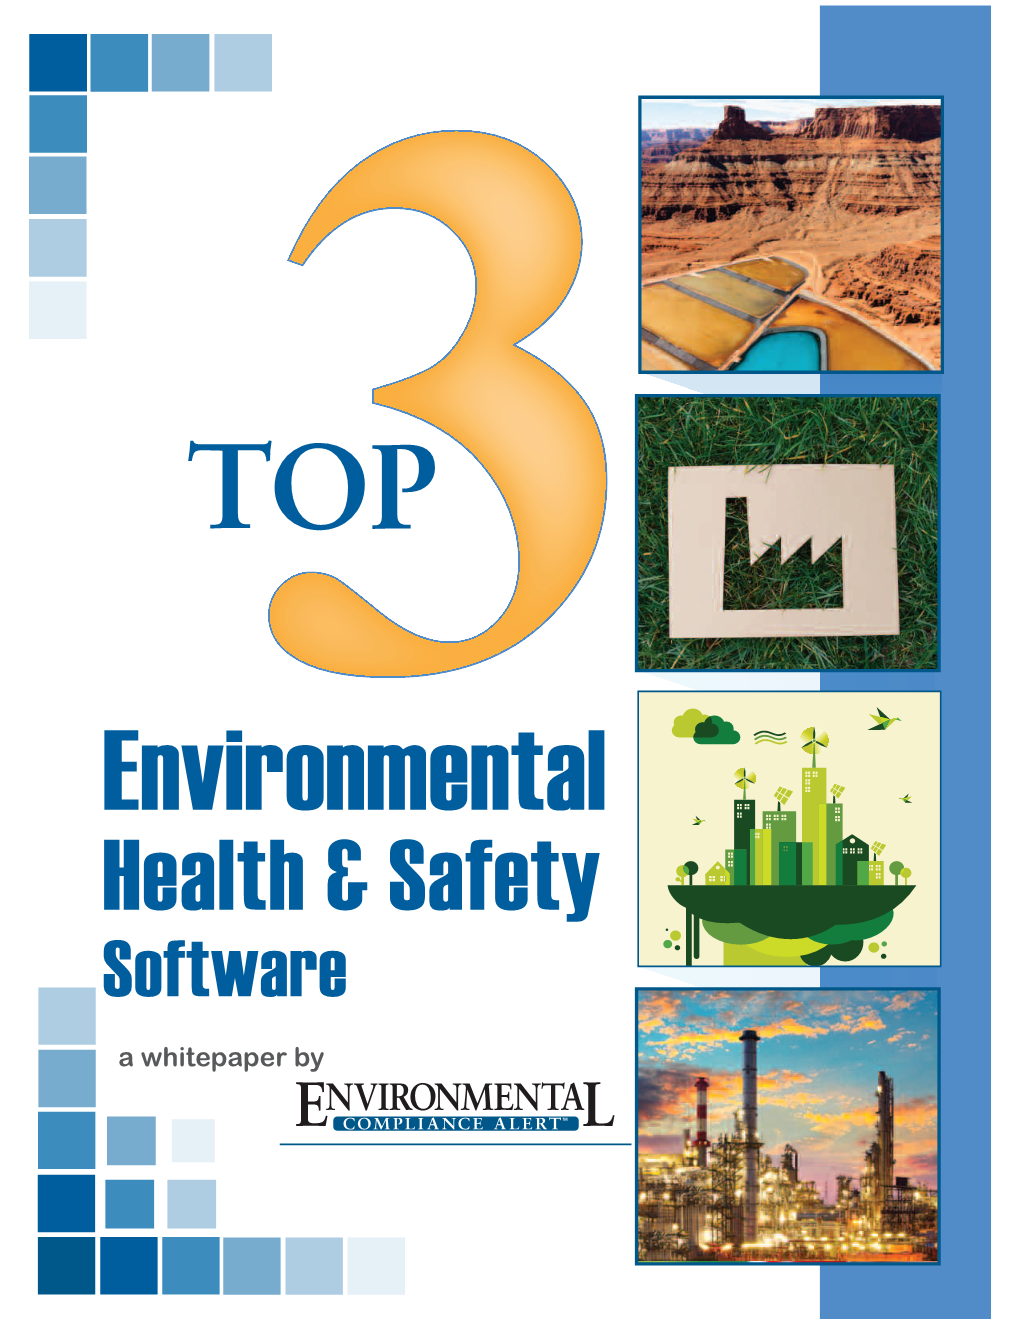 Top 3 Environmental Health & Safety Software